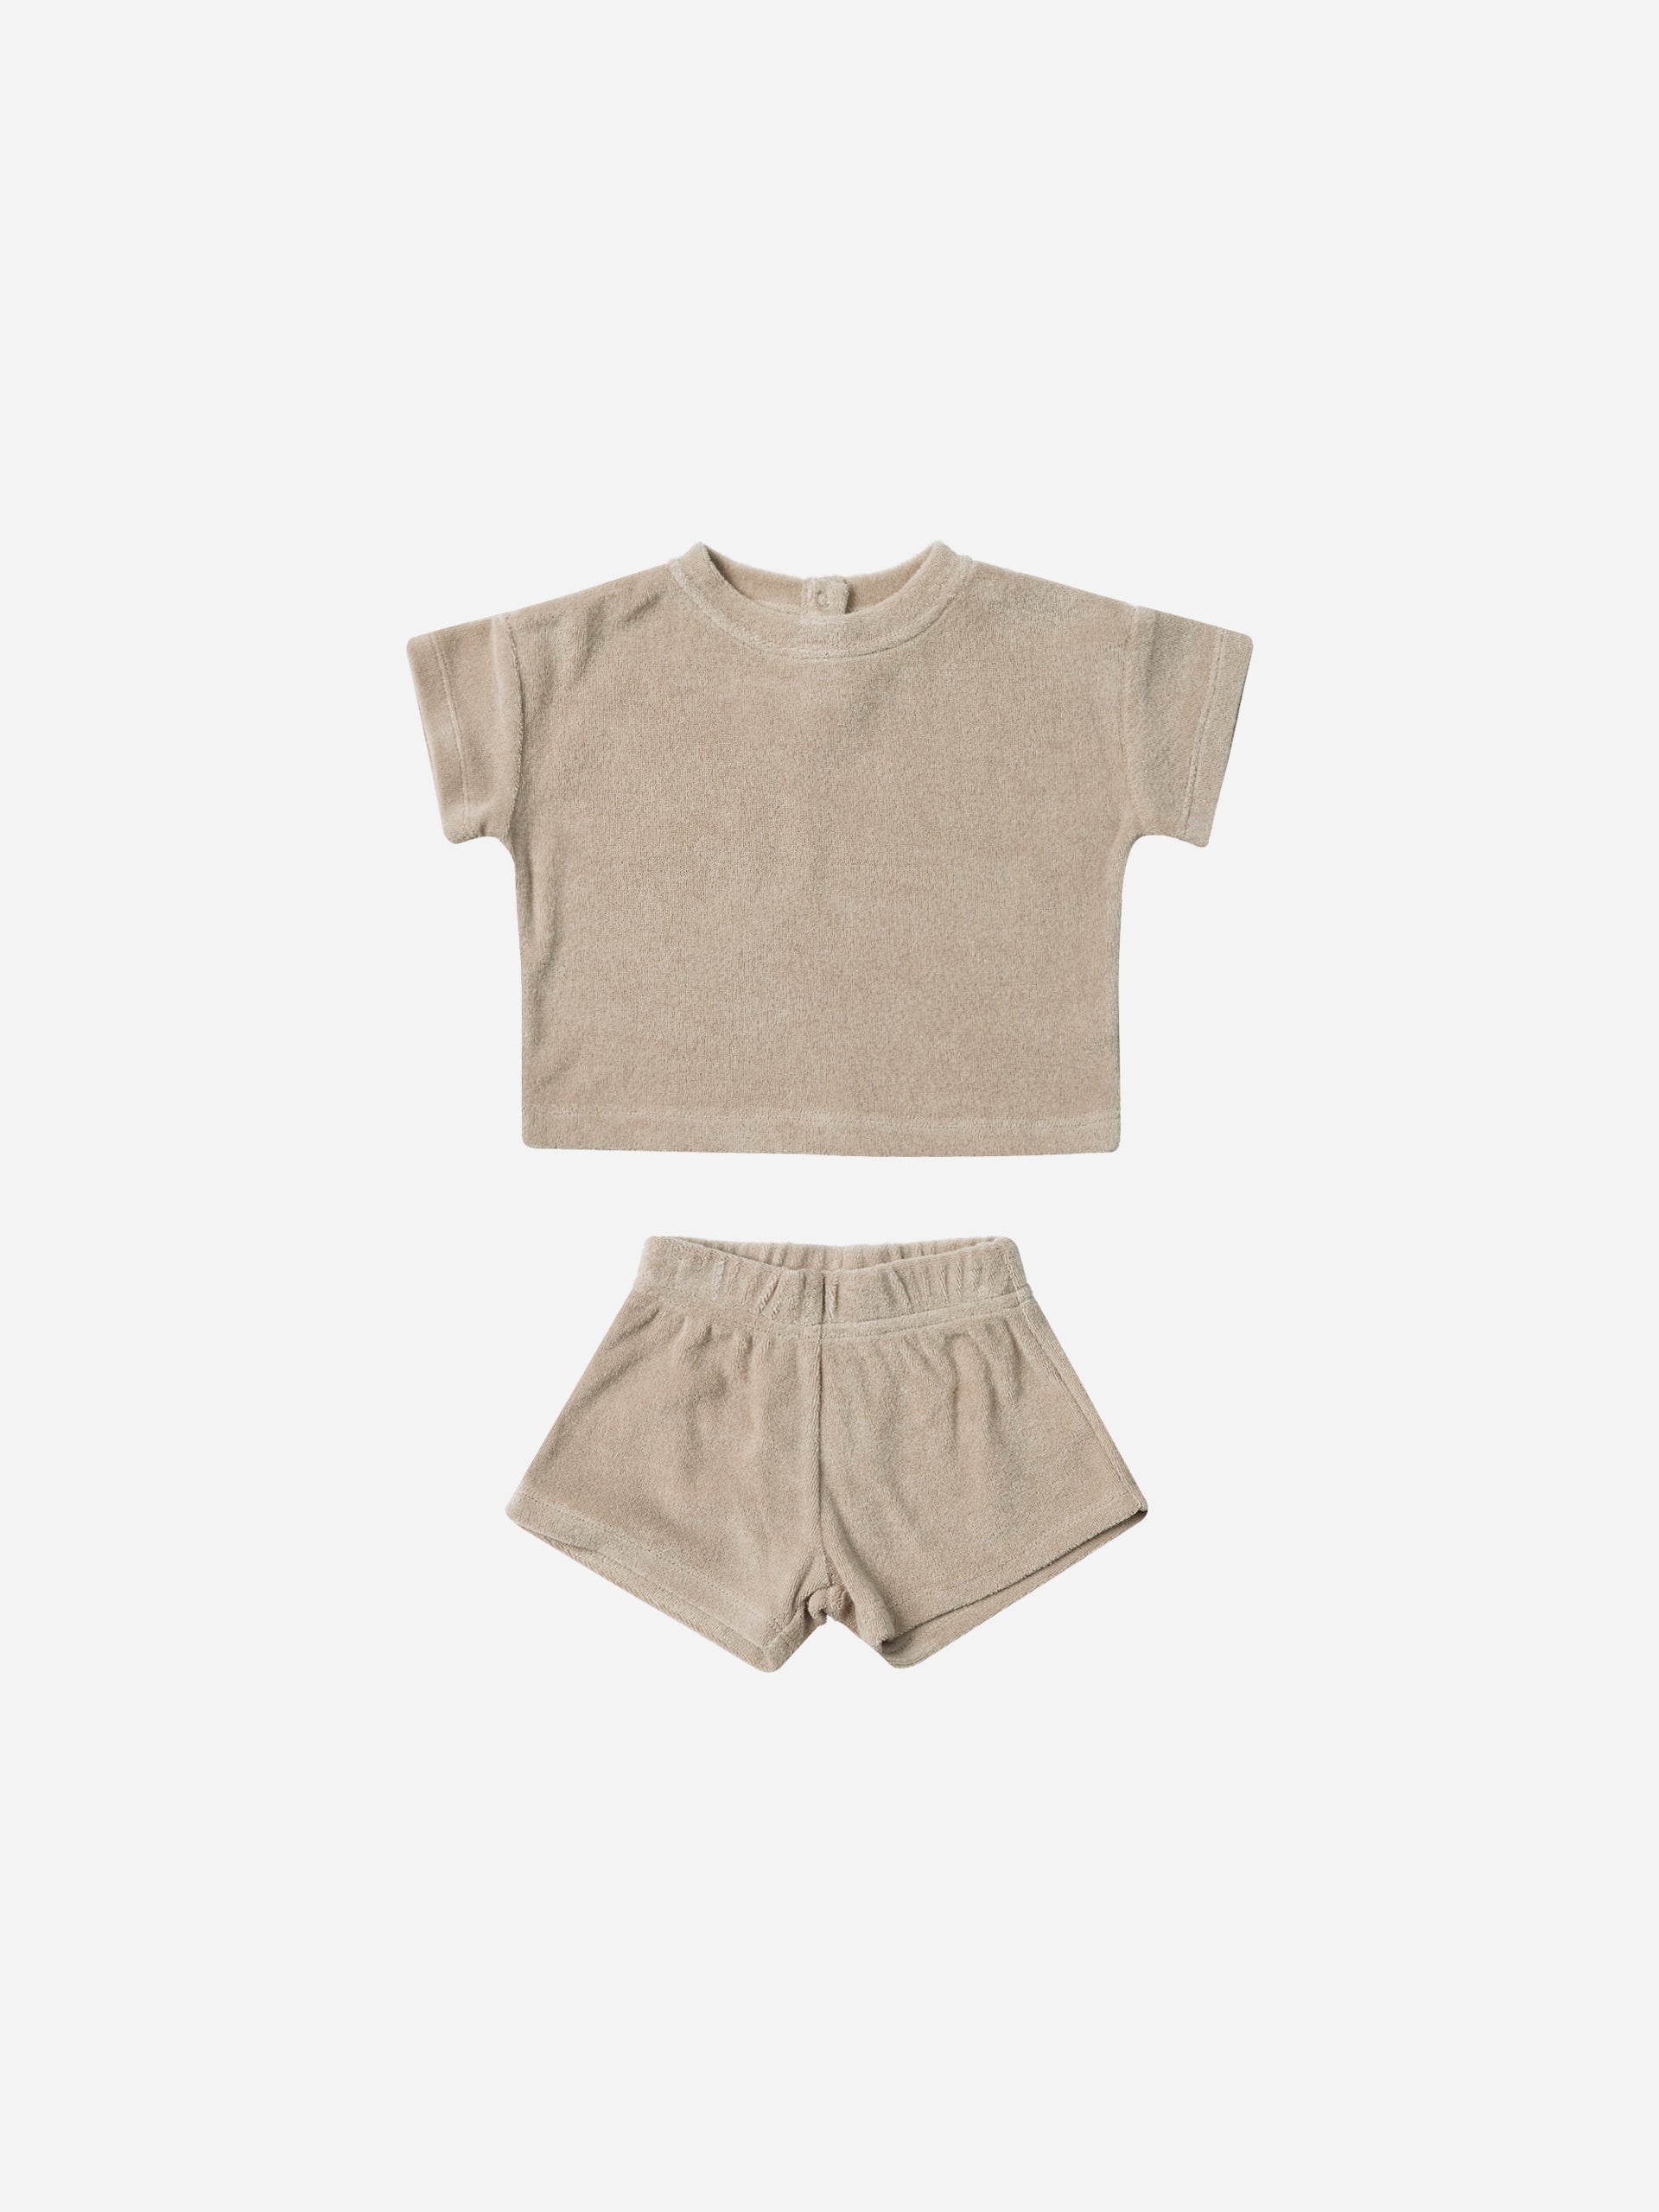 COU COU Pointelle-knit organic cotton shorts